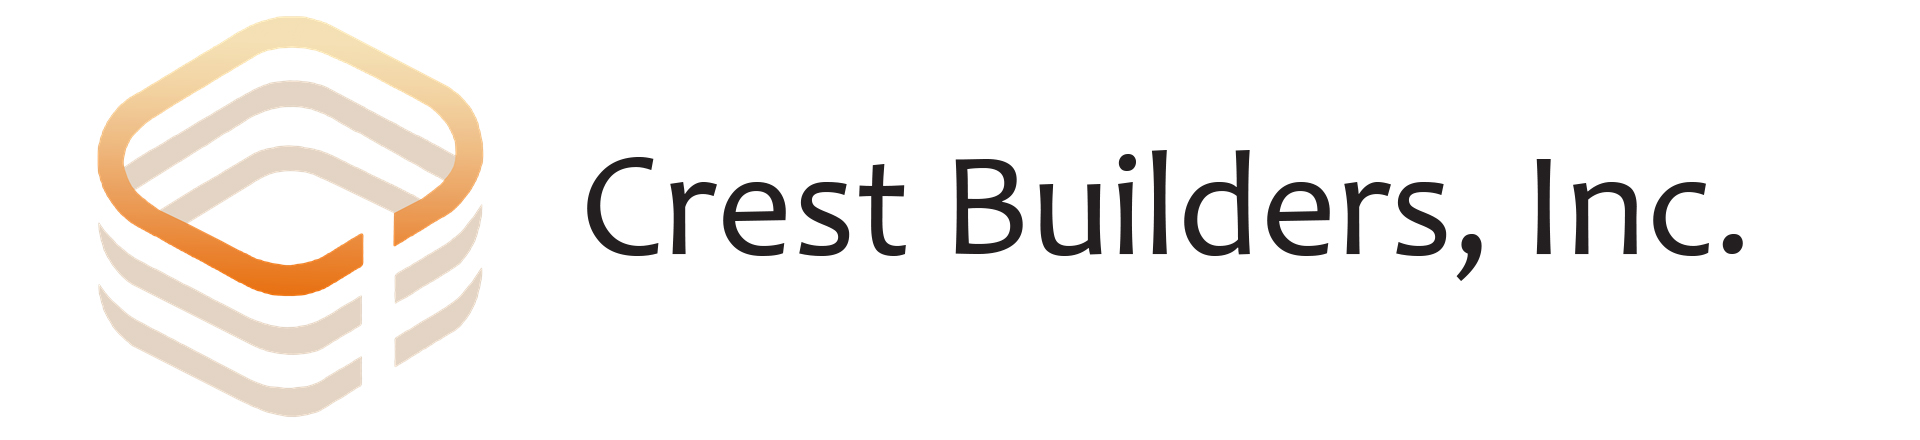 Crest Builders, Inc.